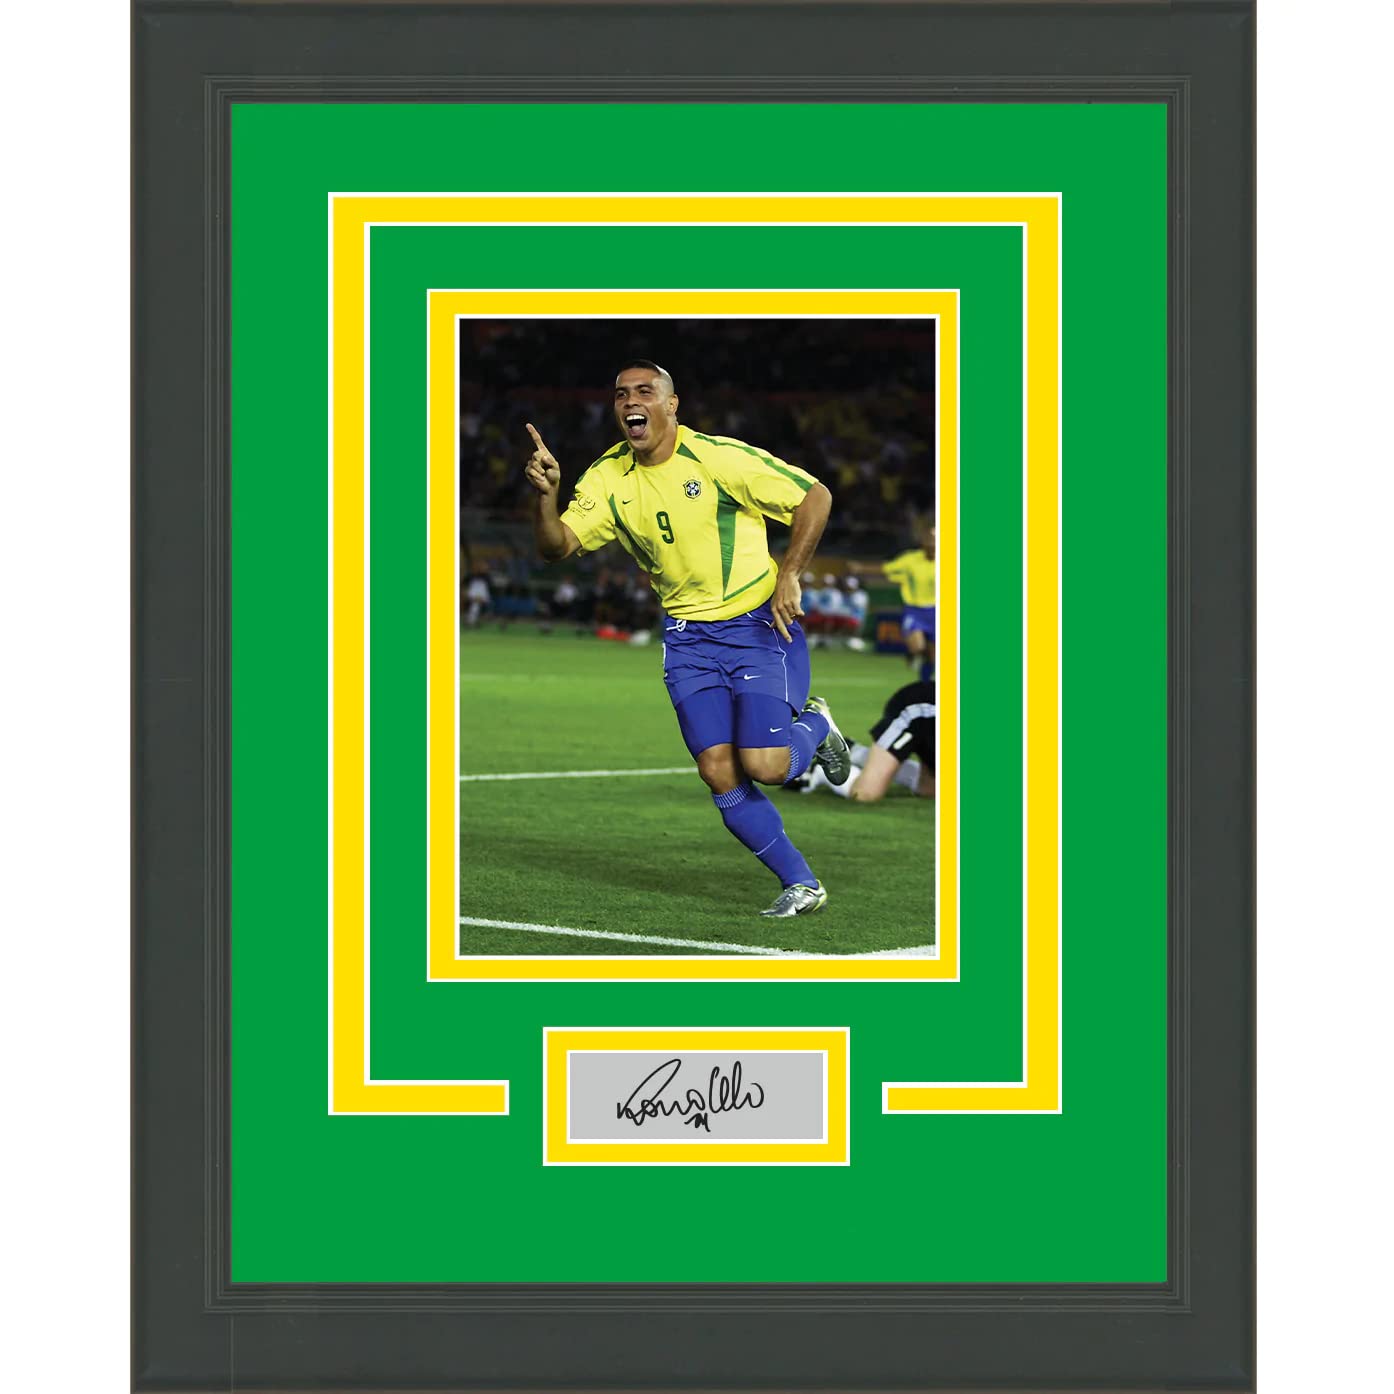 Framed Ronaldo Nazario R9 Facsimile Laser Engraved Signature Auto Brazil 14x17 Soccer Futbol Photo